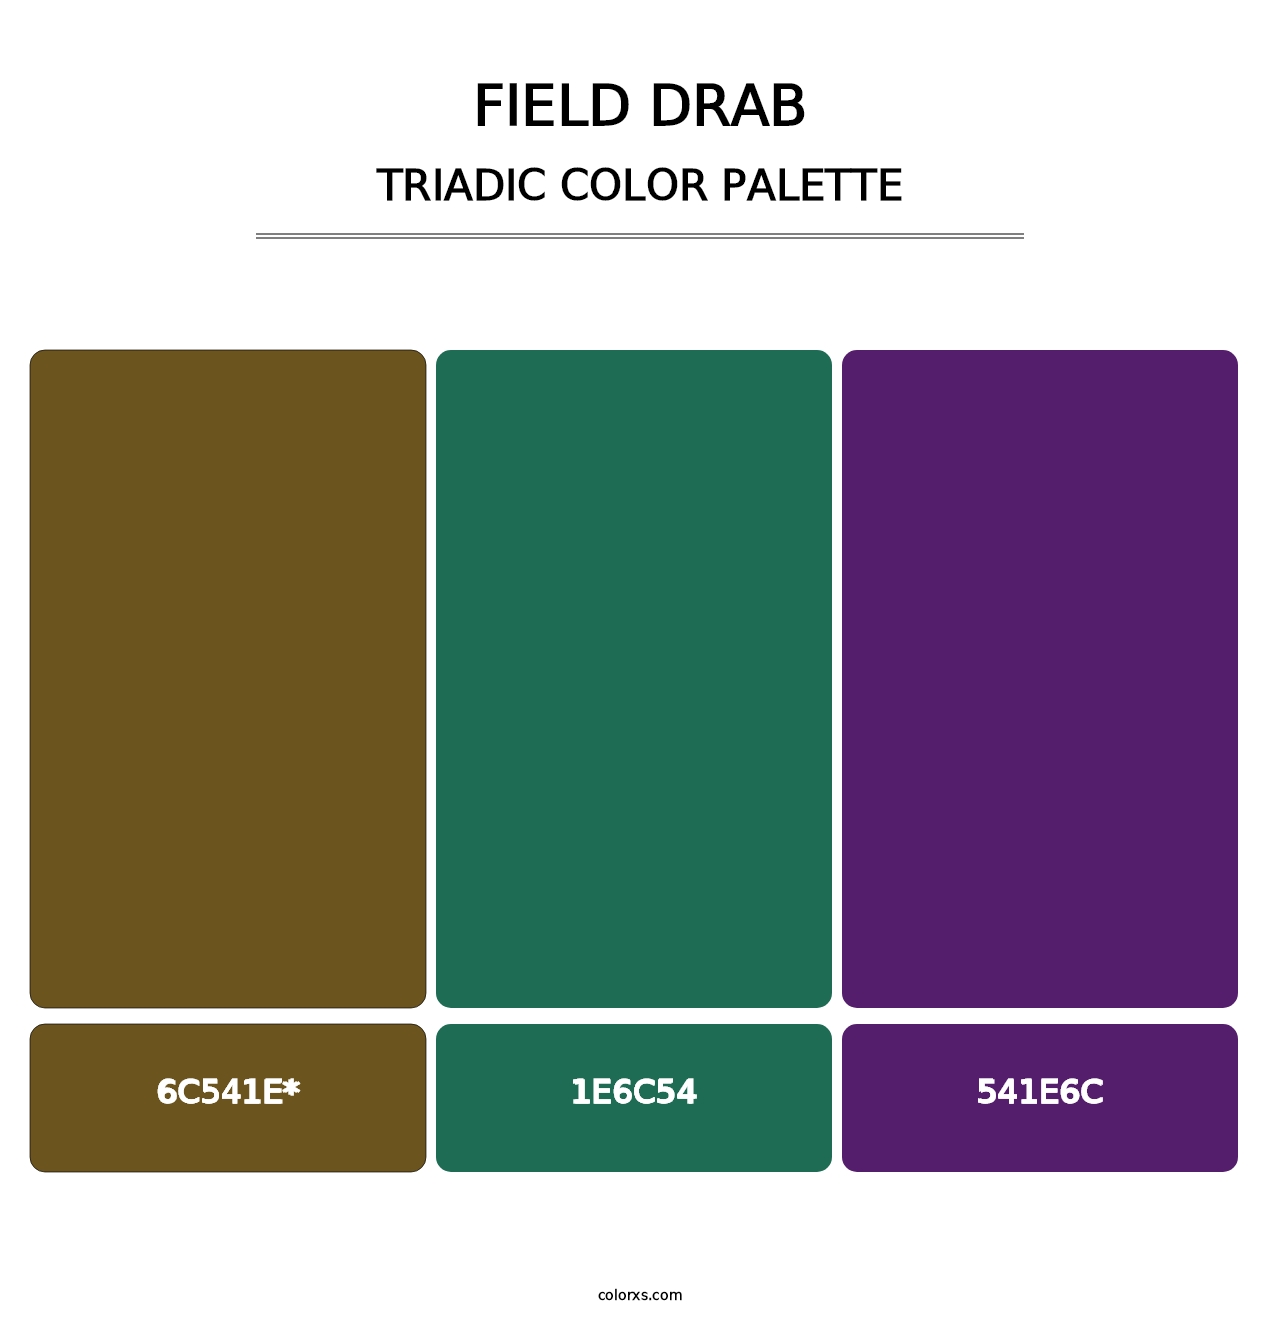 Field Drab - Triadic Color Palette